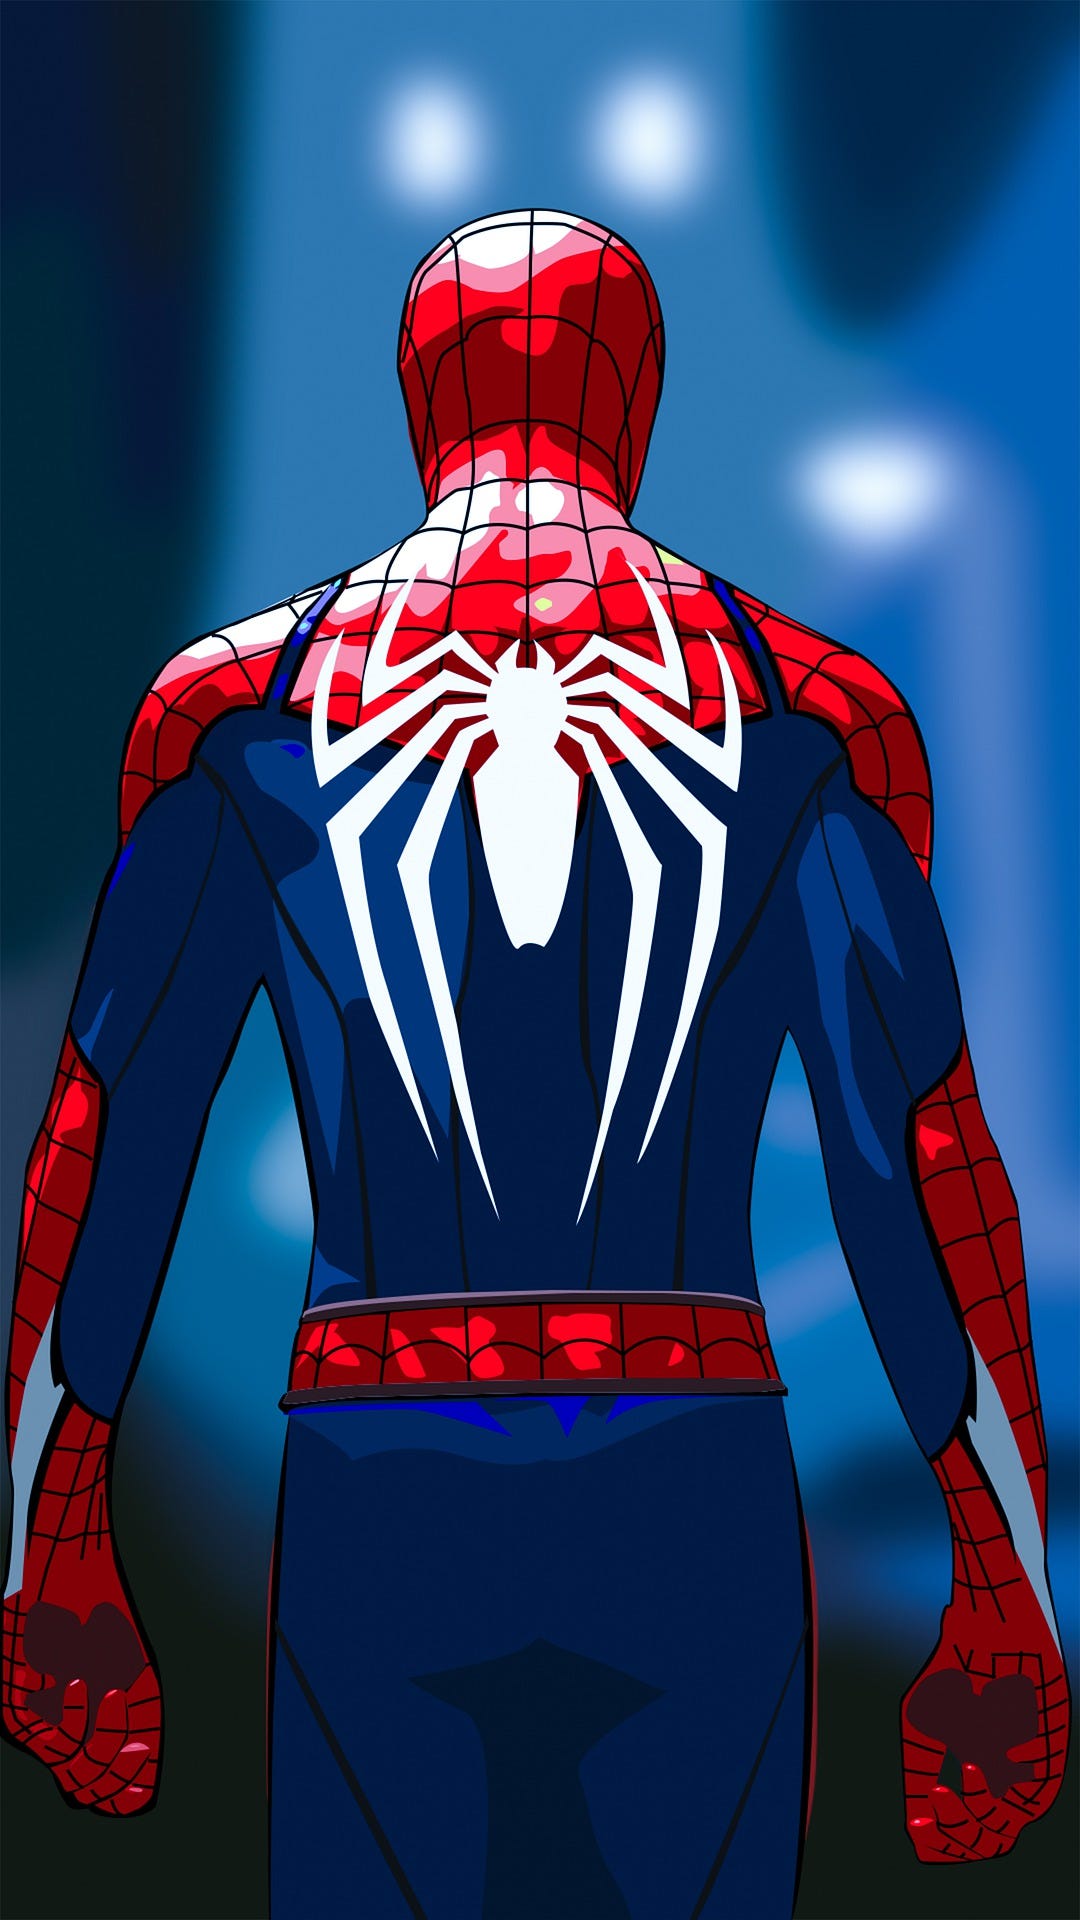 Marvel's Spider-Man 2: Tony Todd's Venom Voice Scared The Rest Of